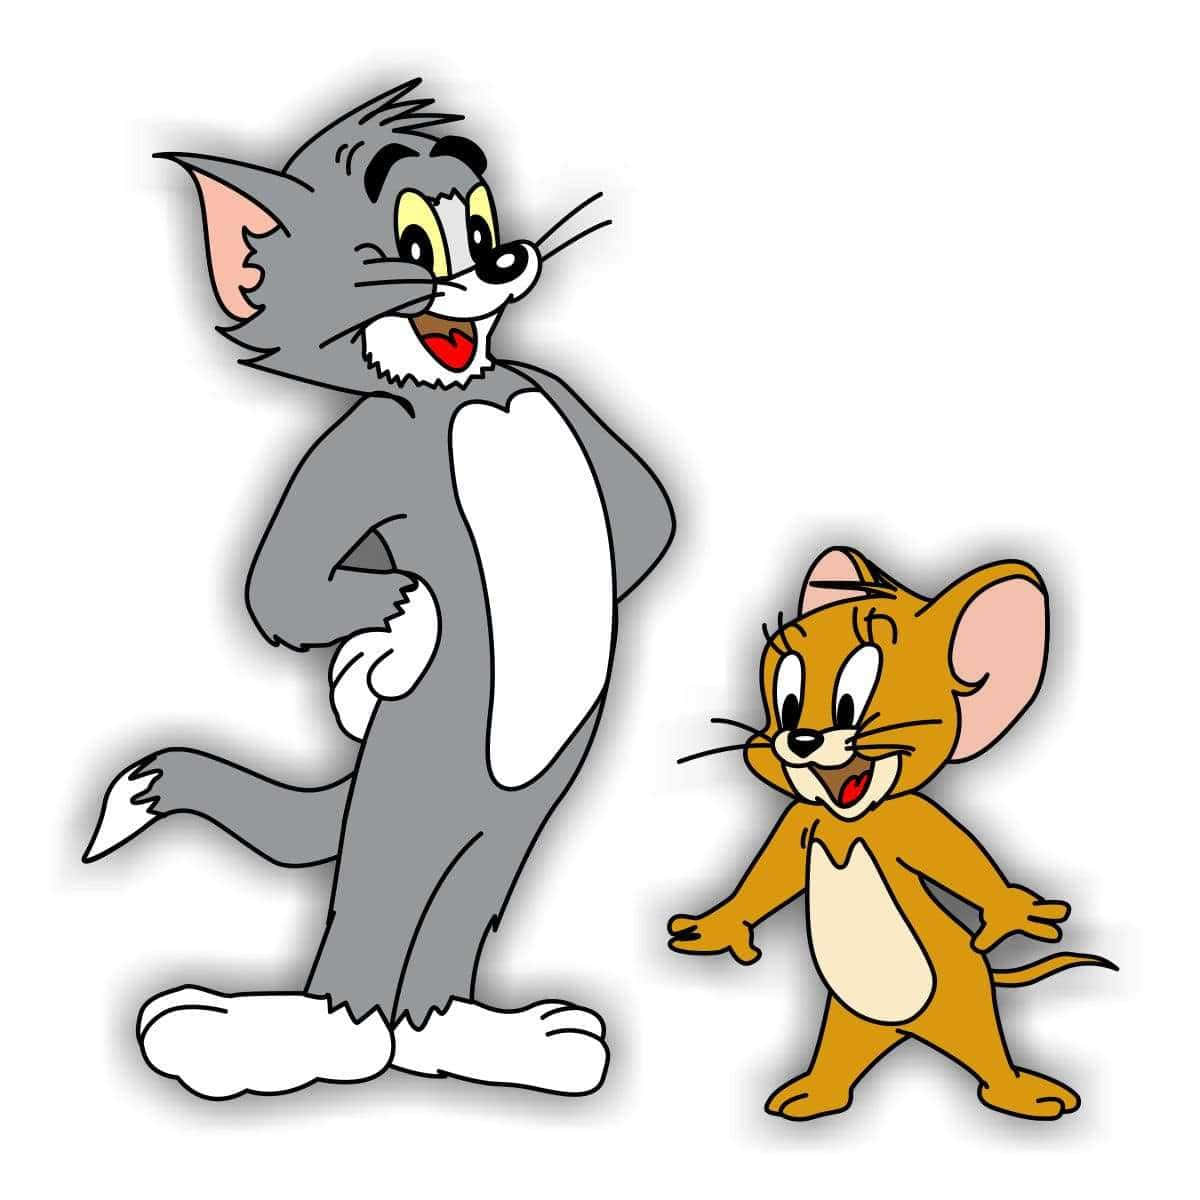 Imagentransparente Divertida De Tom Y Jerry